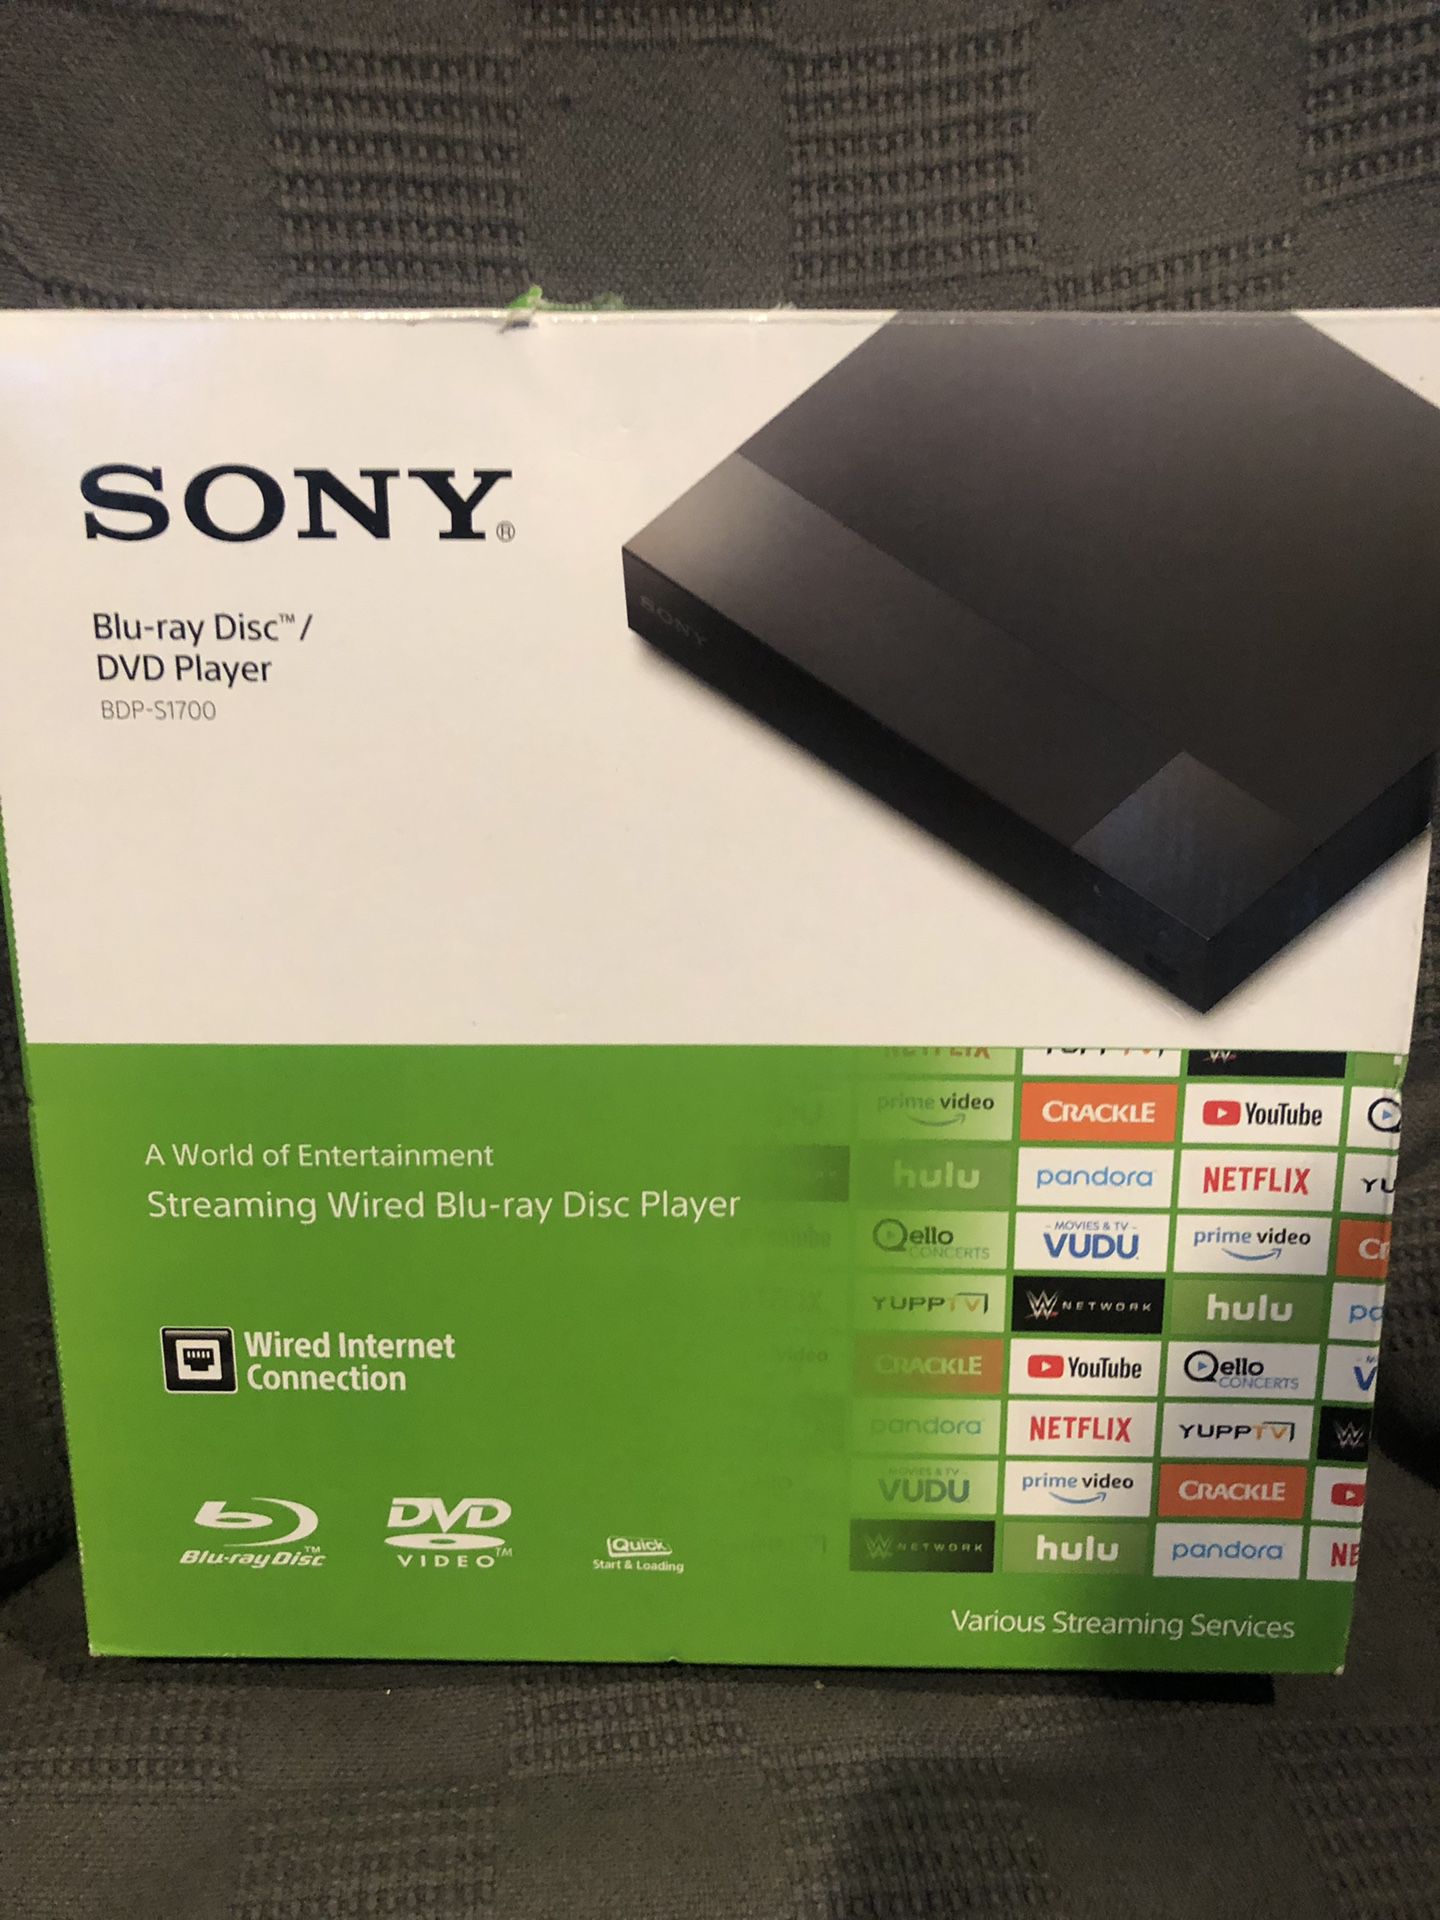 Sony BDP player B1700 Blu-ray